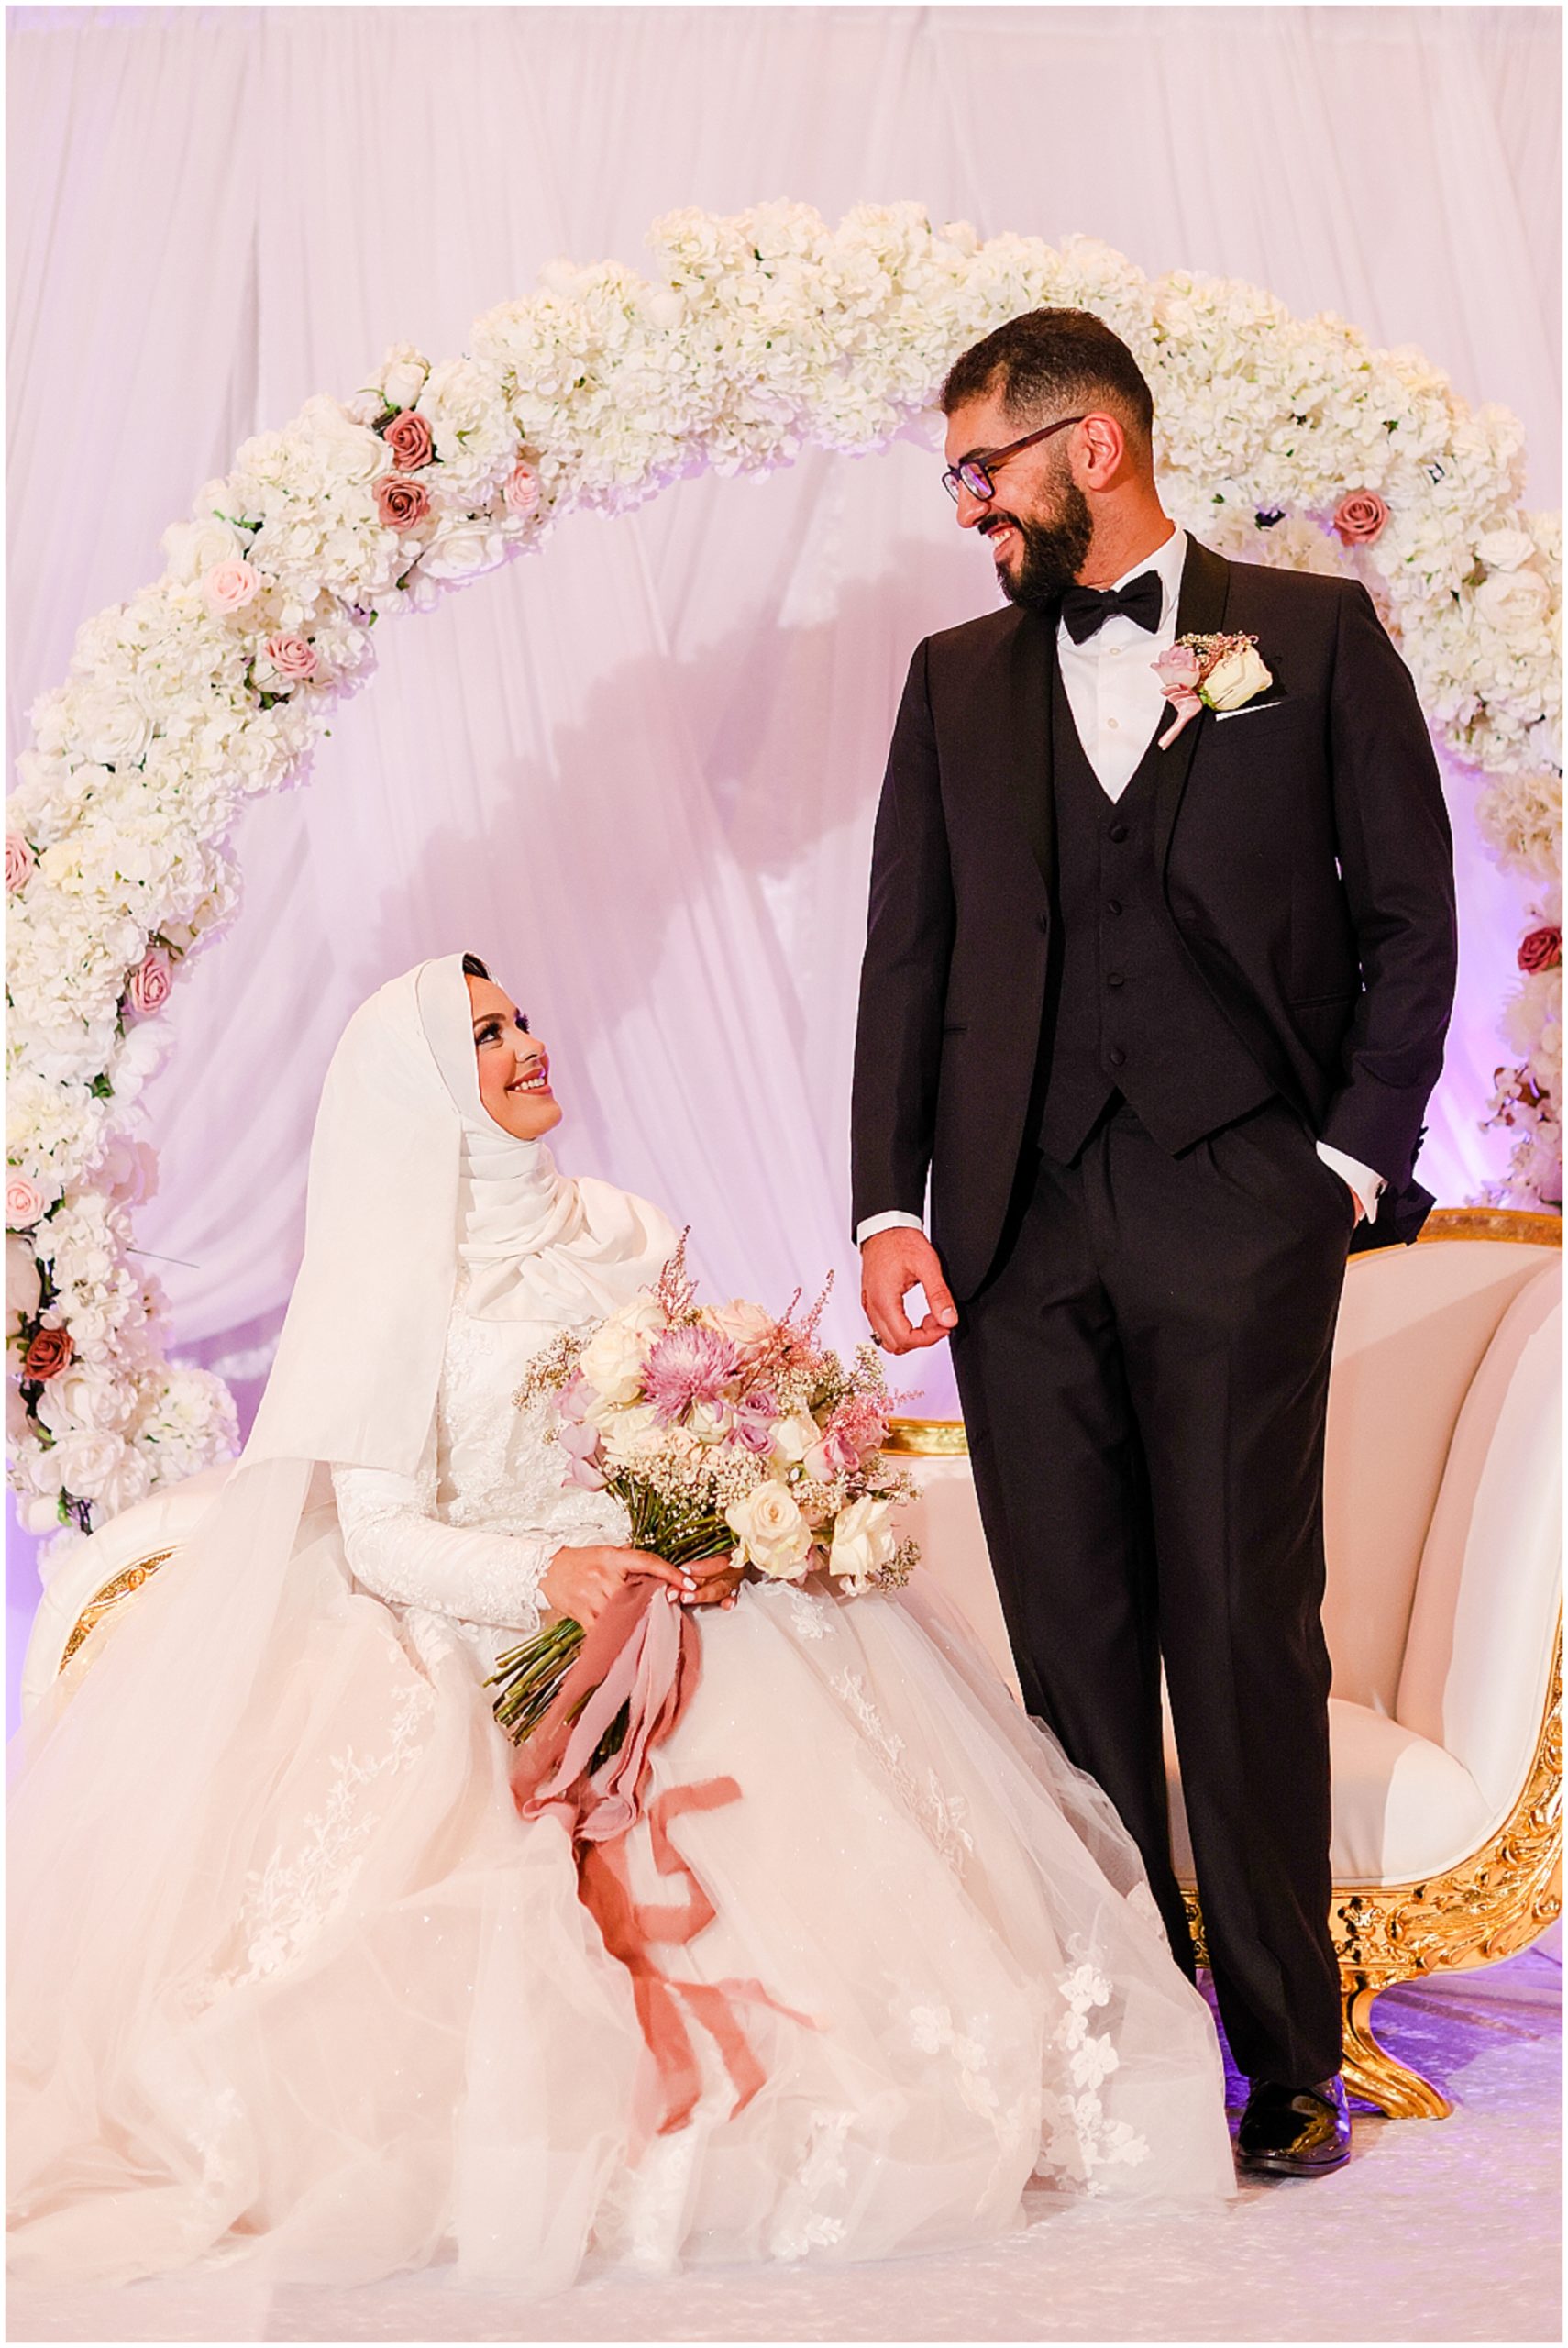 arab muslim bride and groom wedding photos and decorations